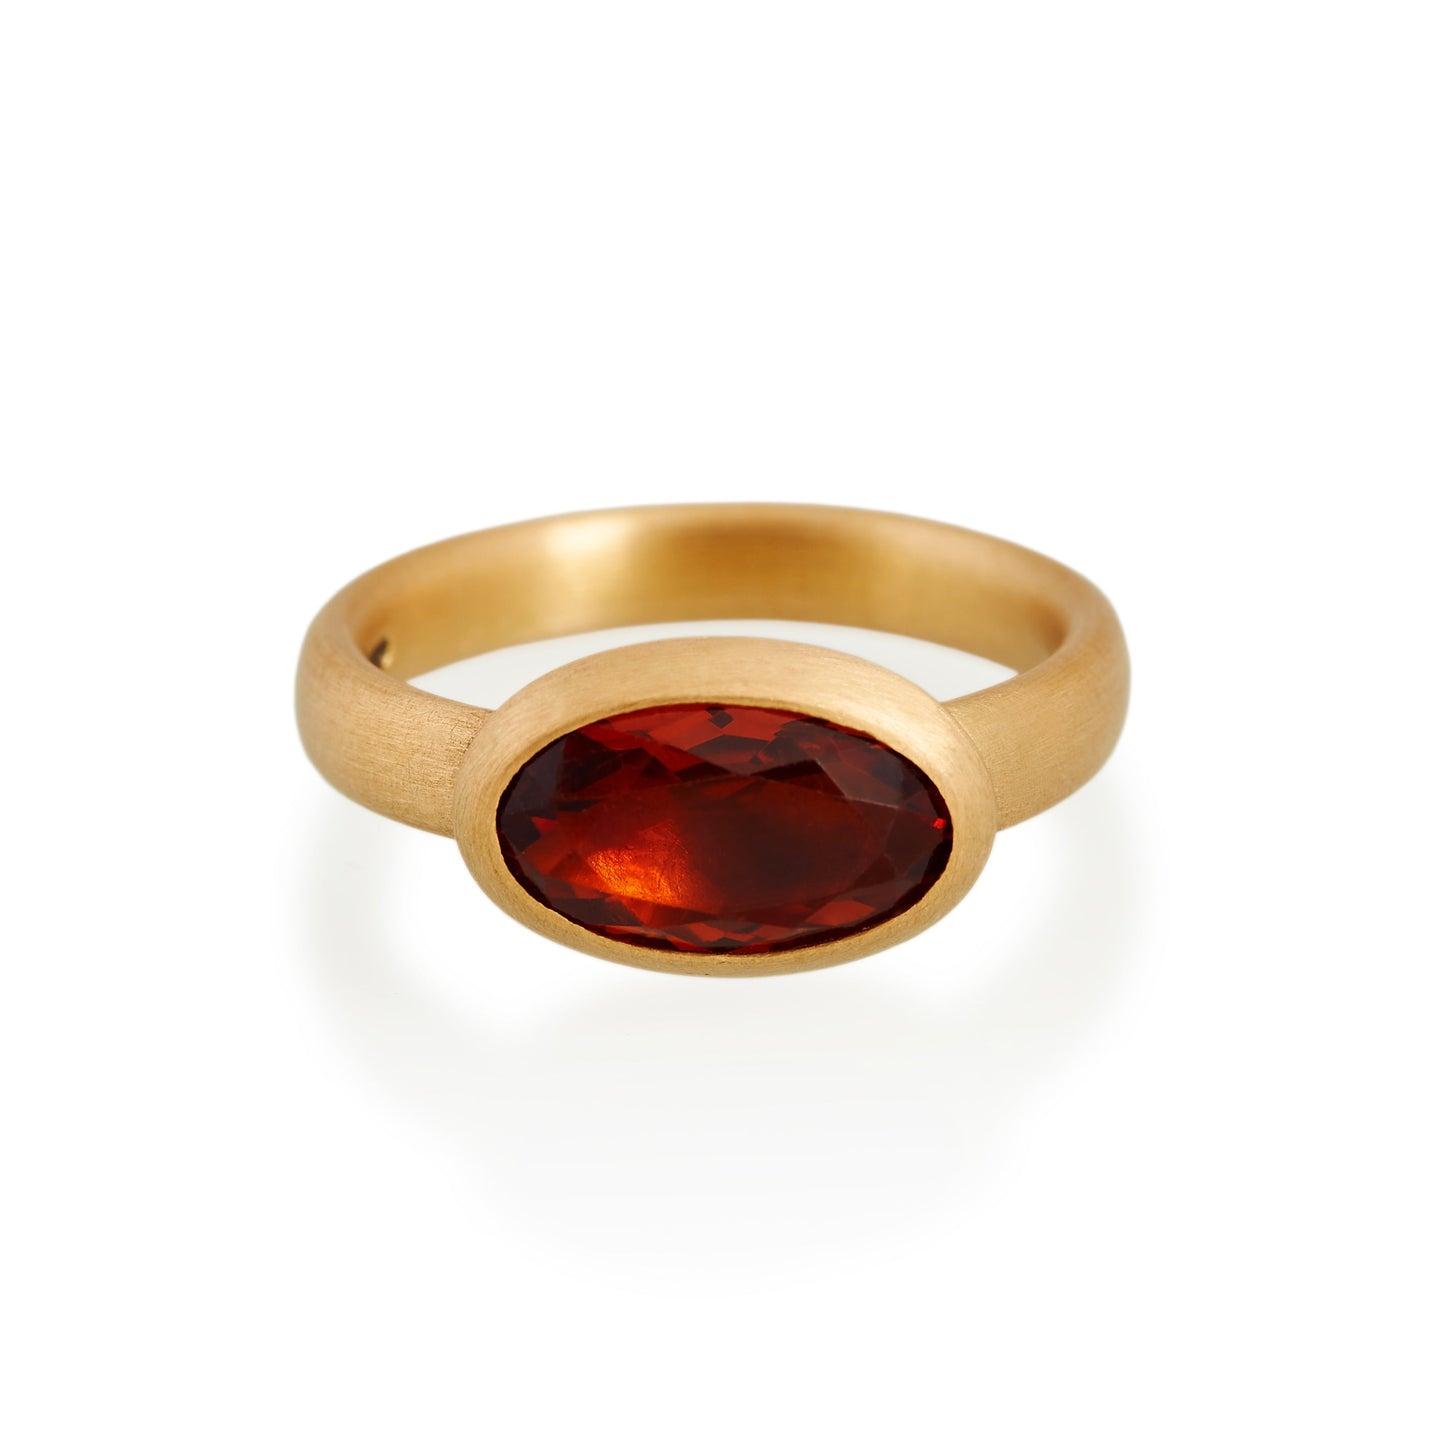 Oval Orange Citrine Ring, 22ct gold